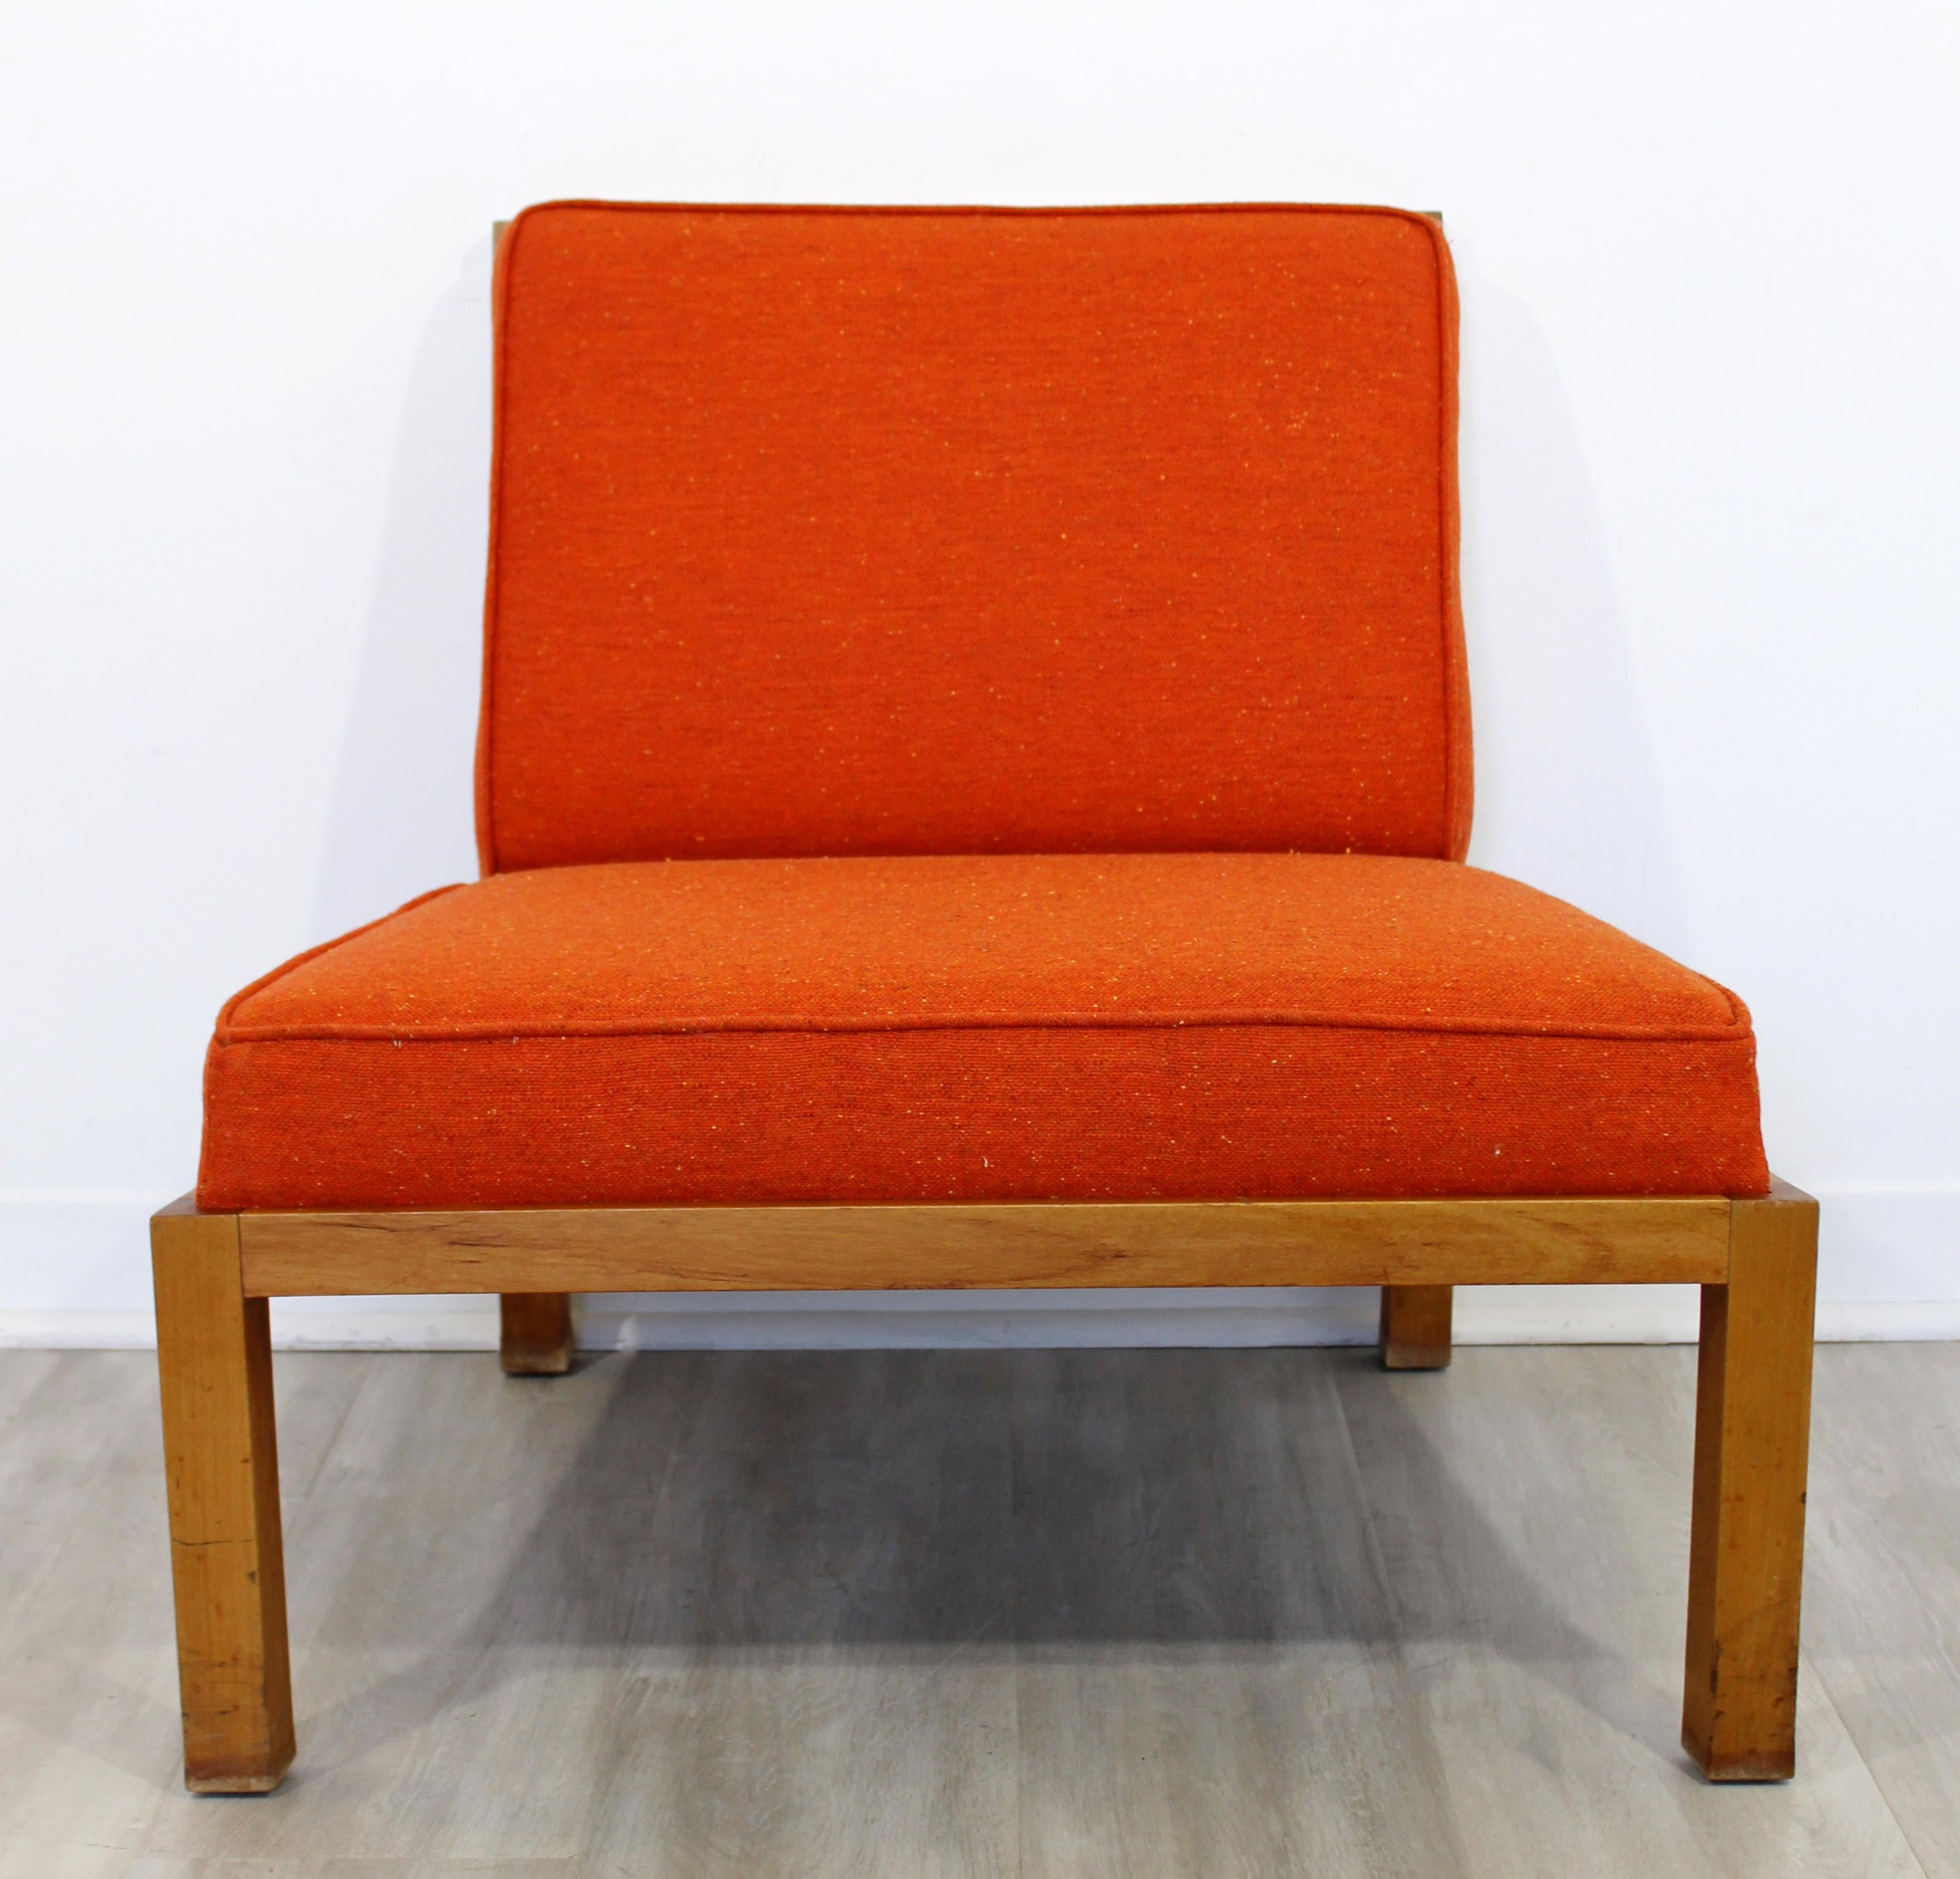 American Mid-Century Modern Baker Wood Slat Back Side Lounge Accent Chair 1960s Orange